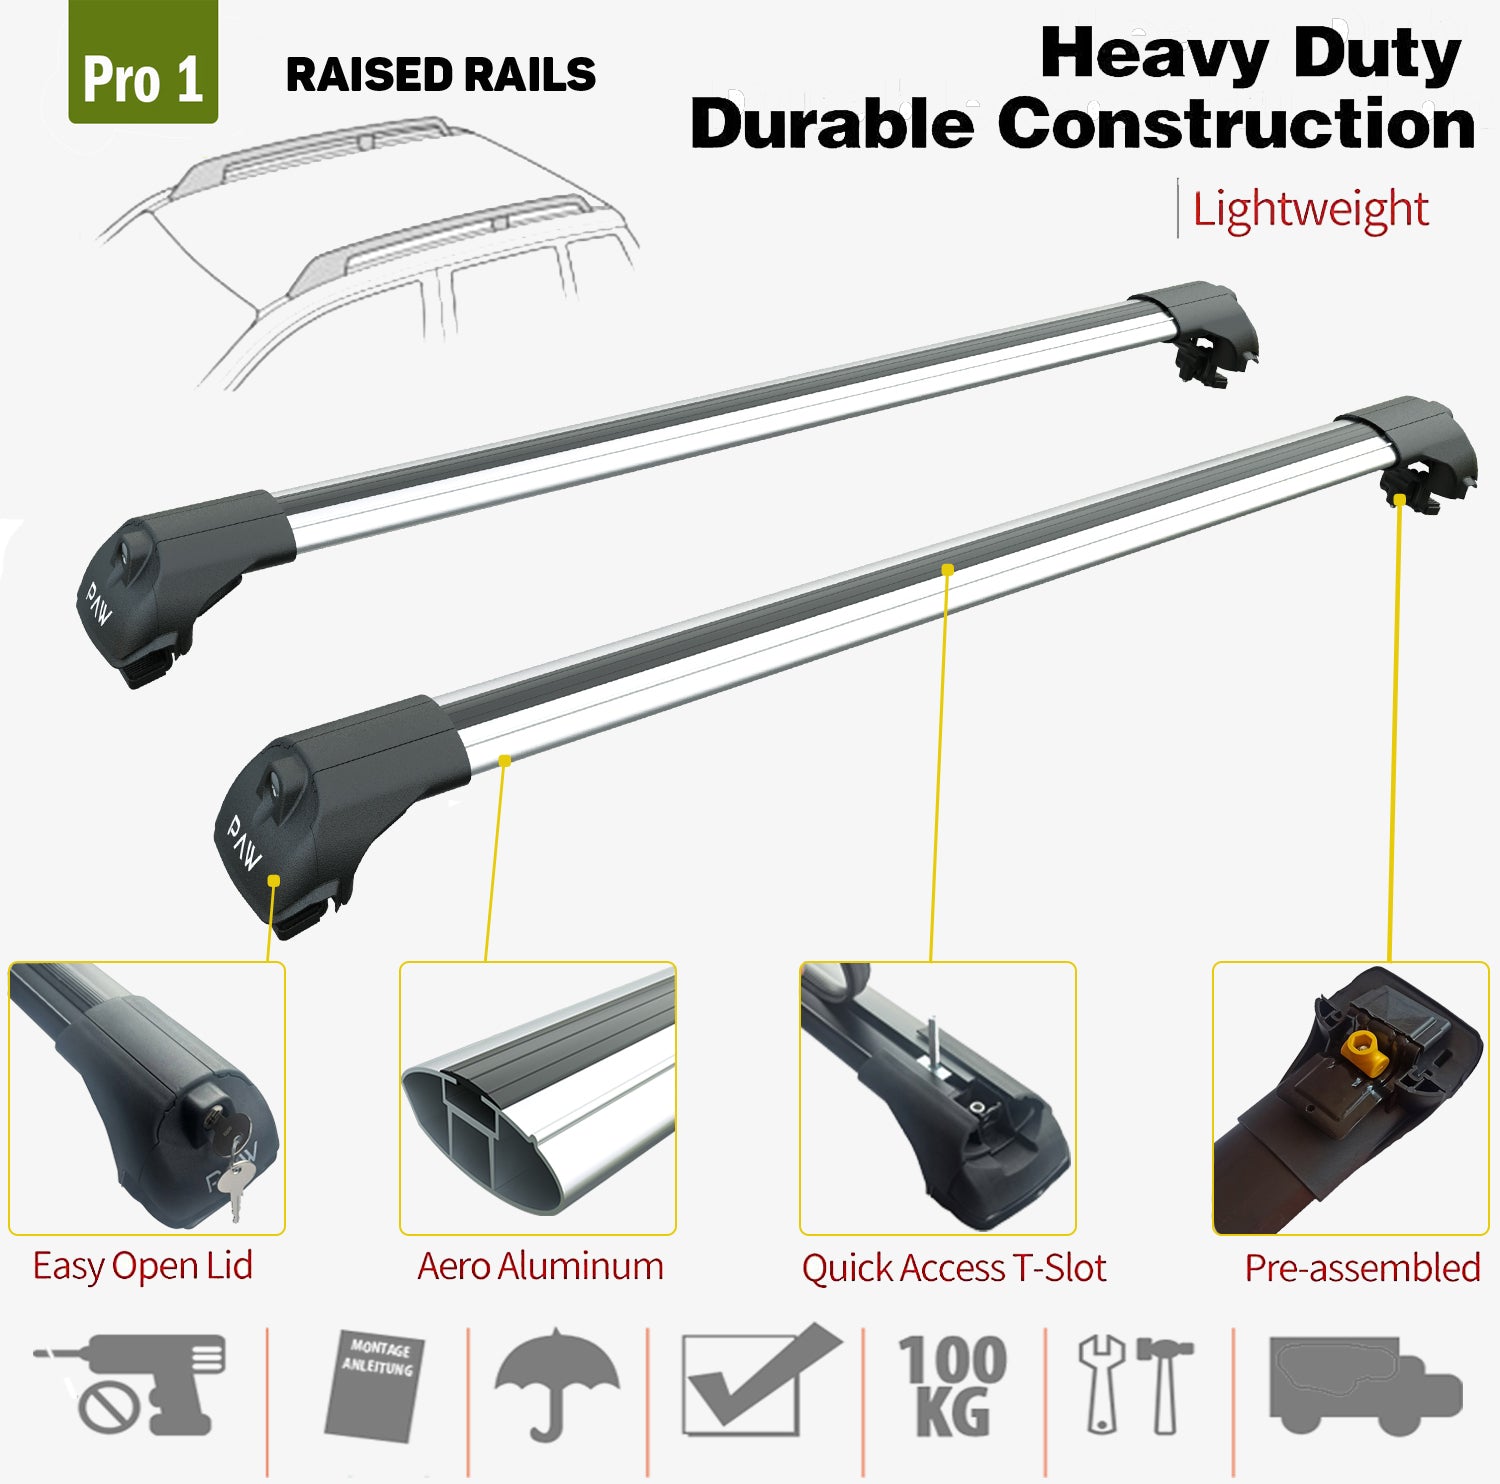 For Dacia Duster 2010-2014 Roof Rack System, Aluminium Cross Bar, Metal Bracket, Lockable, Silver